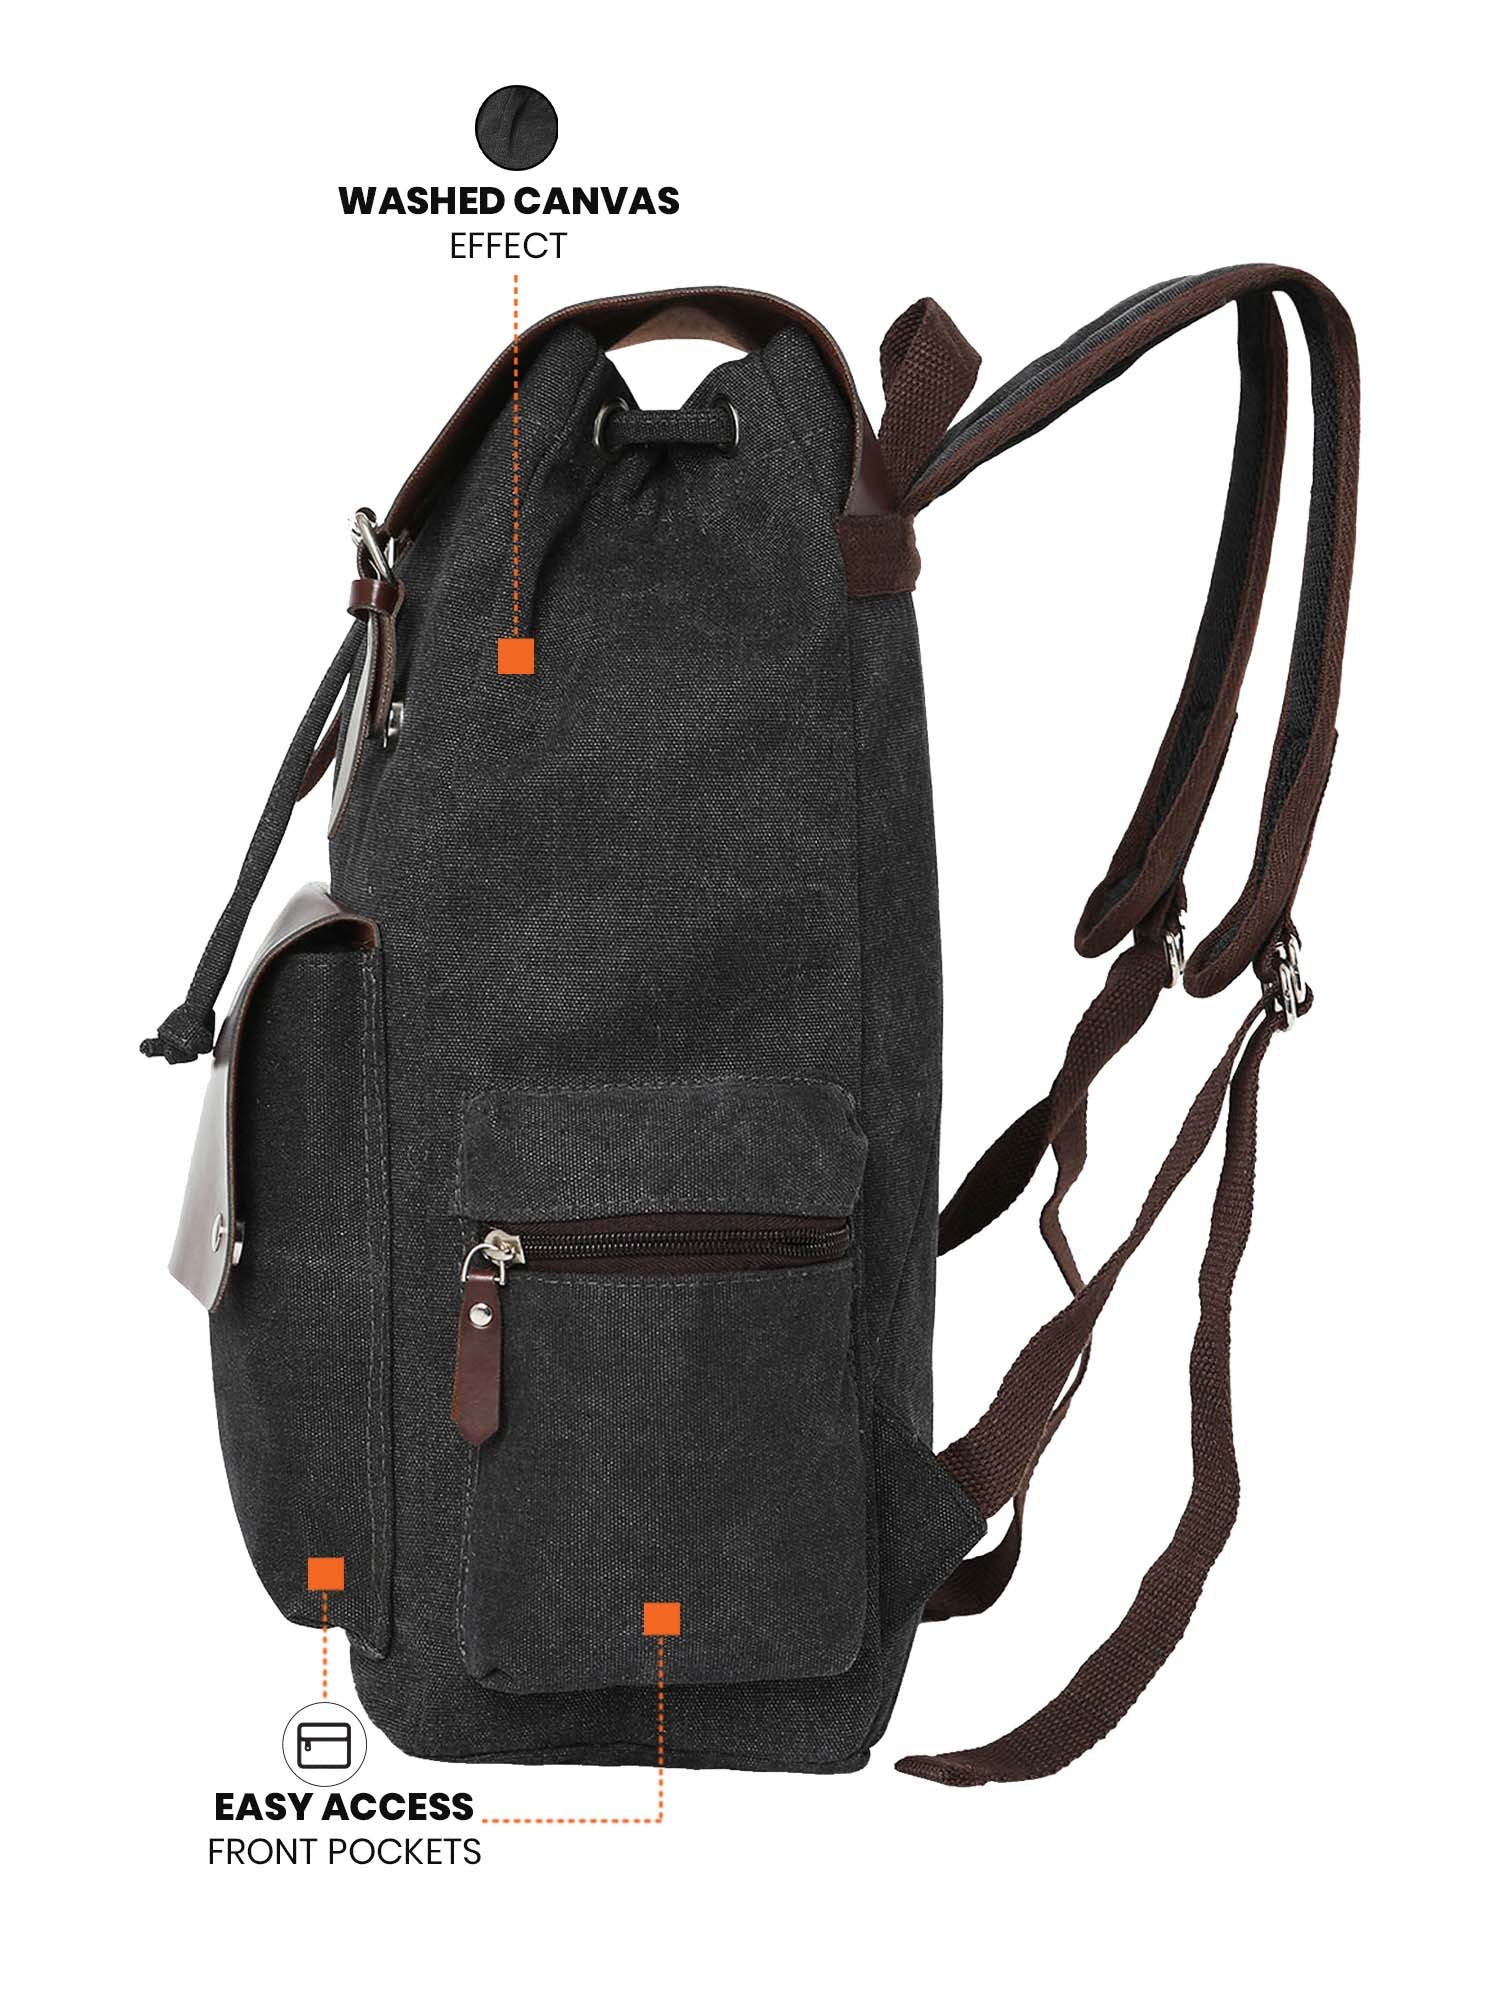 Pro-VI Laptop Backpack | Midnight